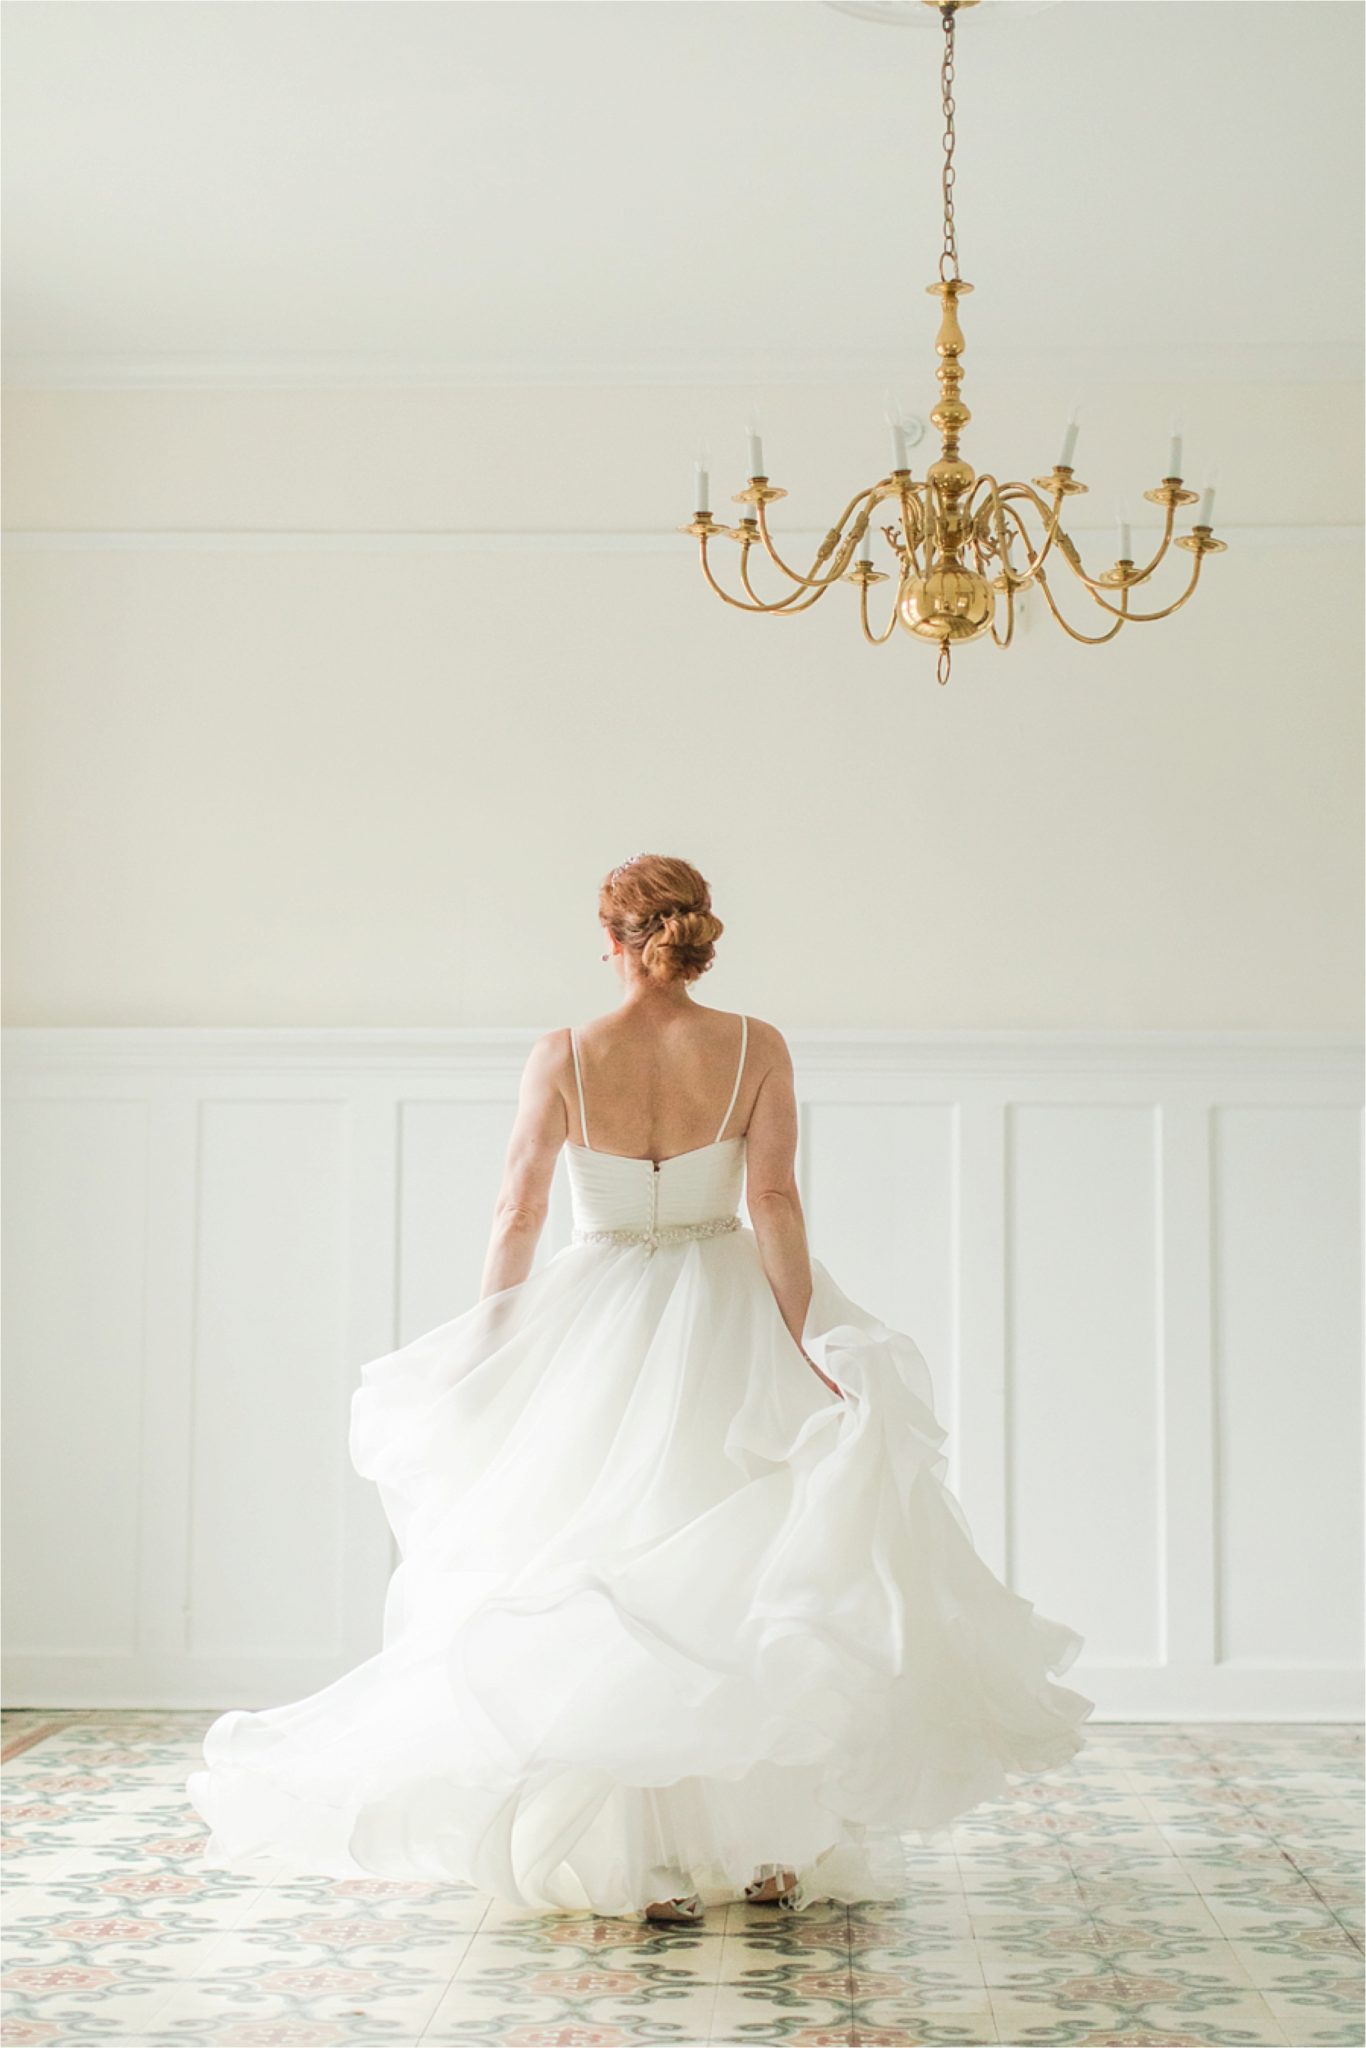 Bridal Session at The Pillars of Mobile-Mobile Alabama Wedding Photographer-Sarra-Bridal session-Wedding dress